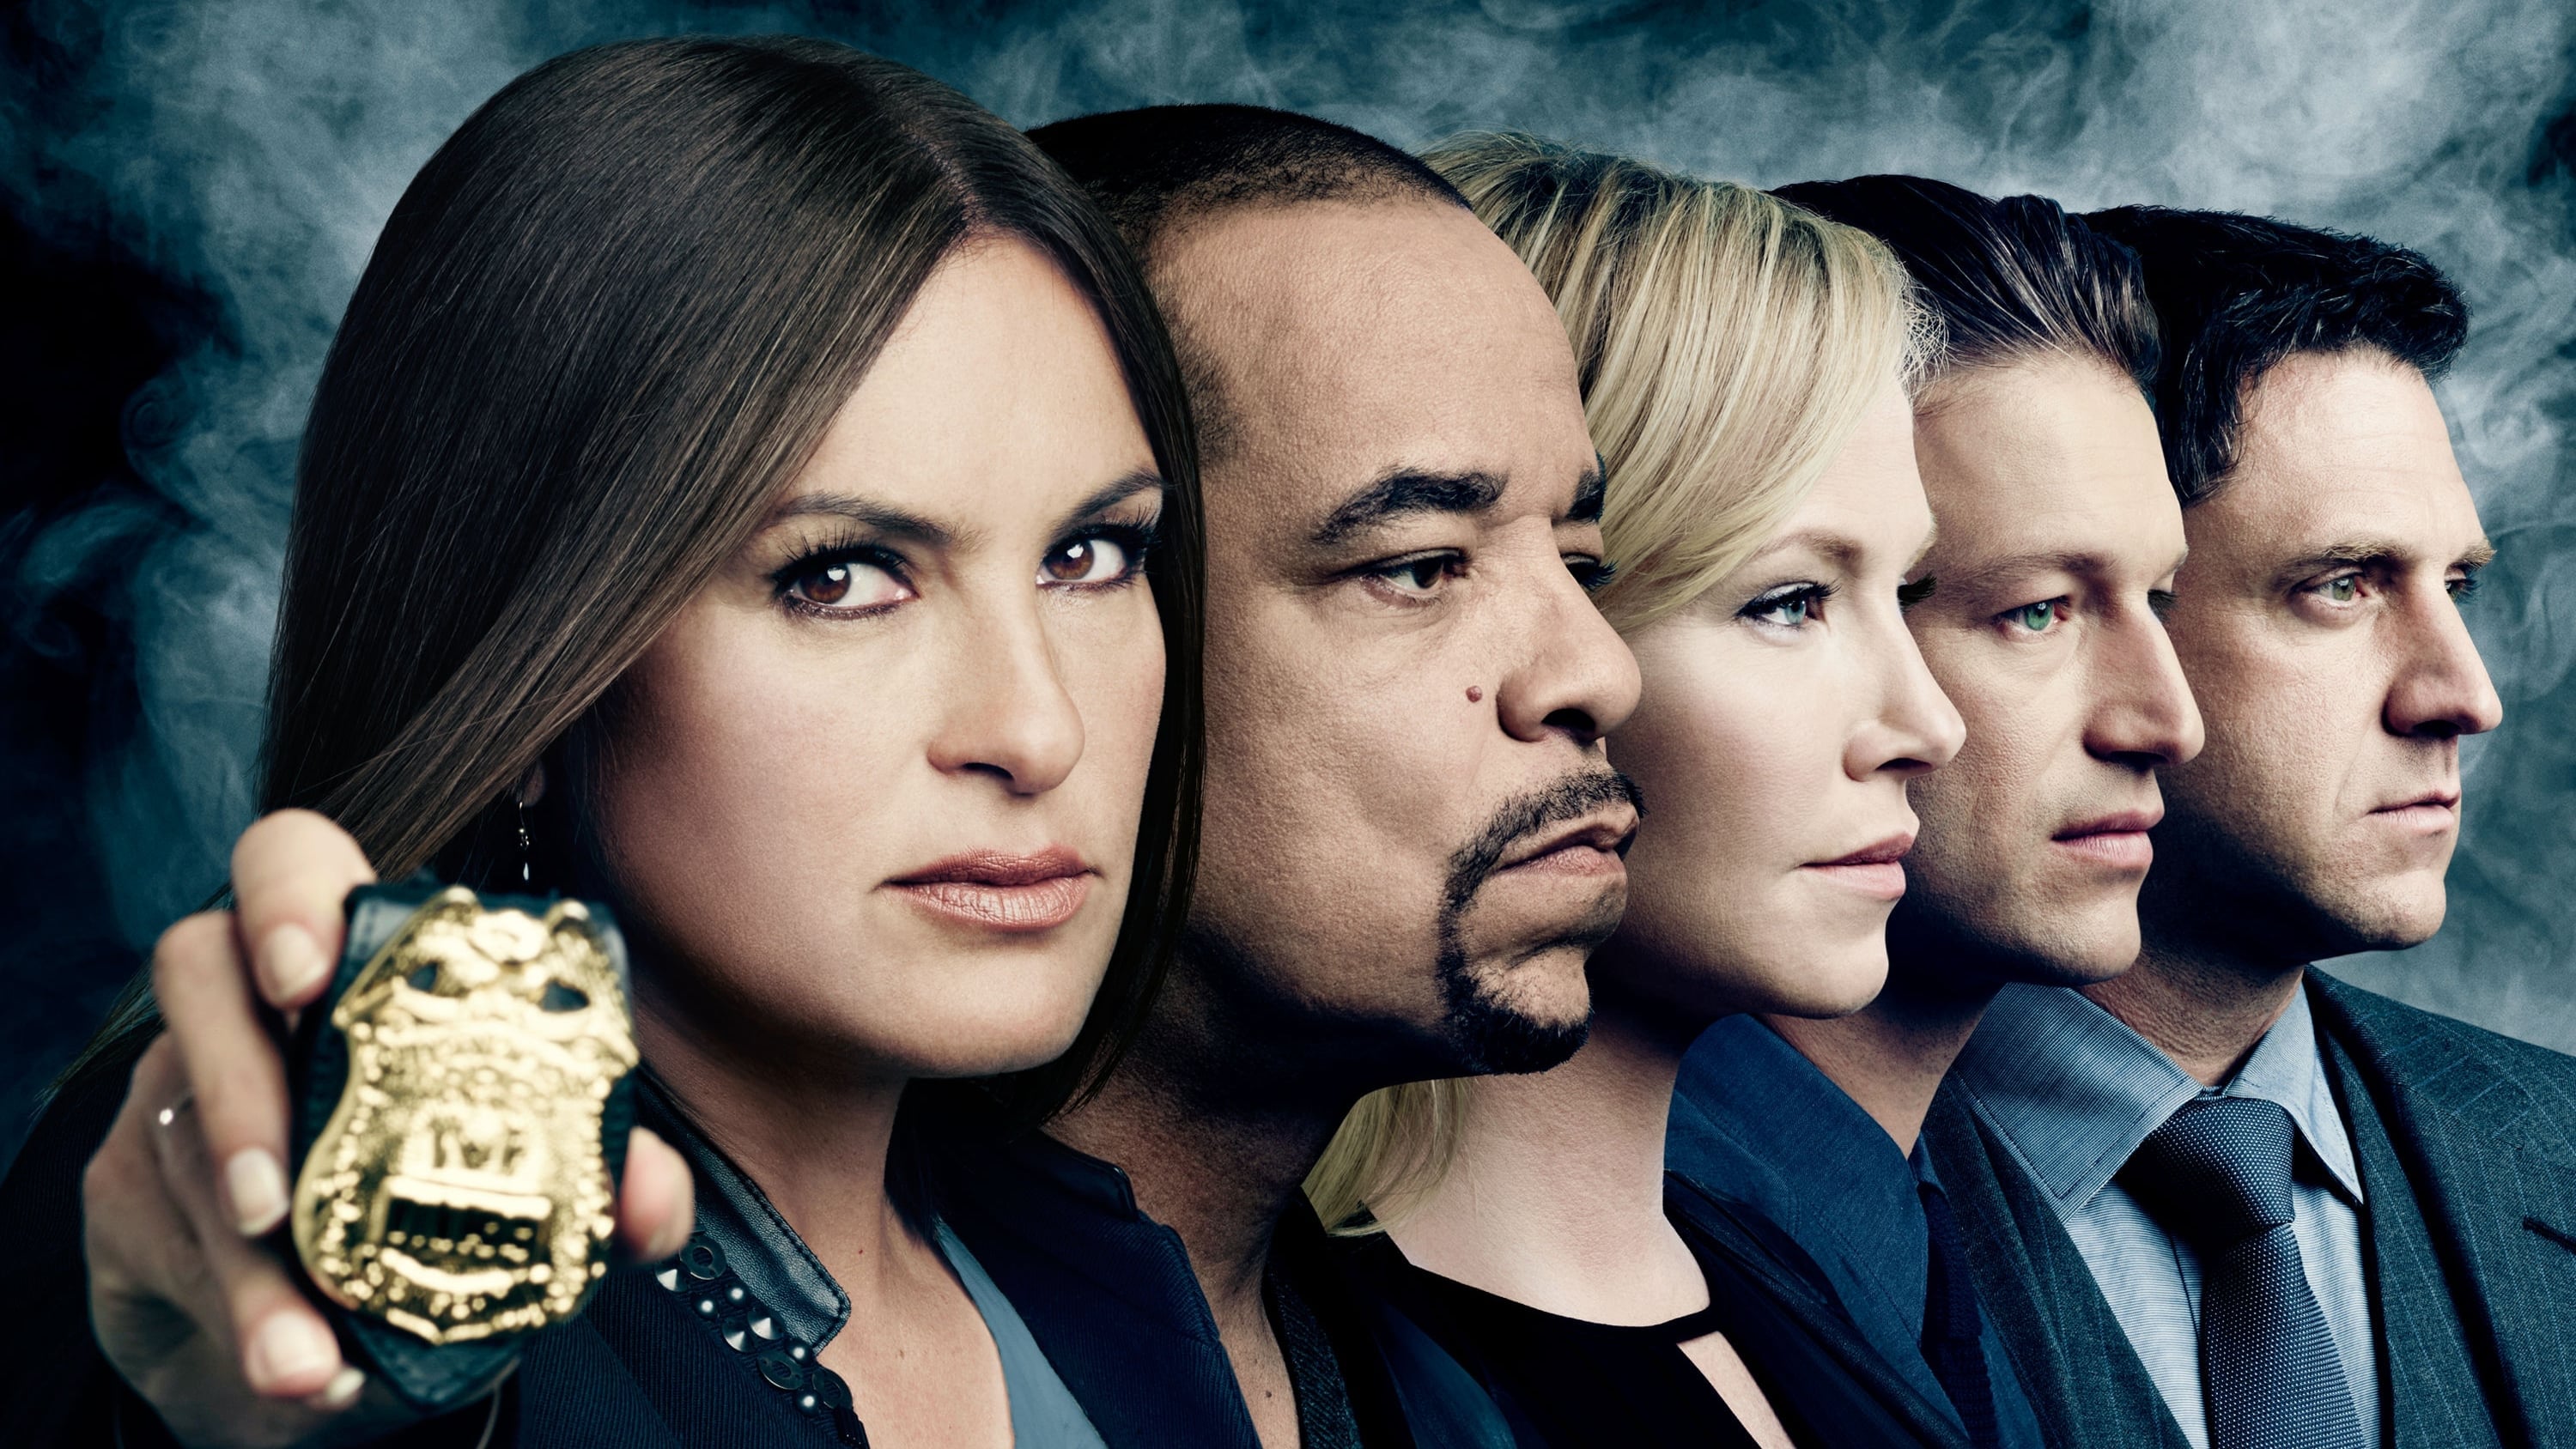 Law & Order: Special Victims Unit - Season 23 Episode 2